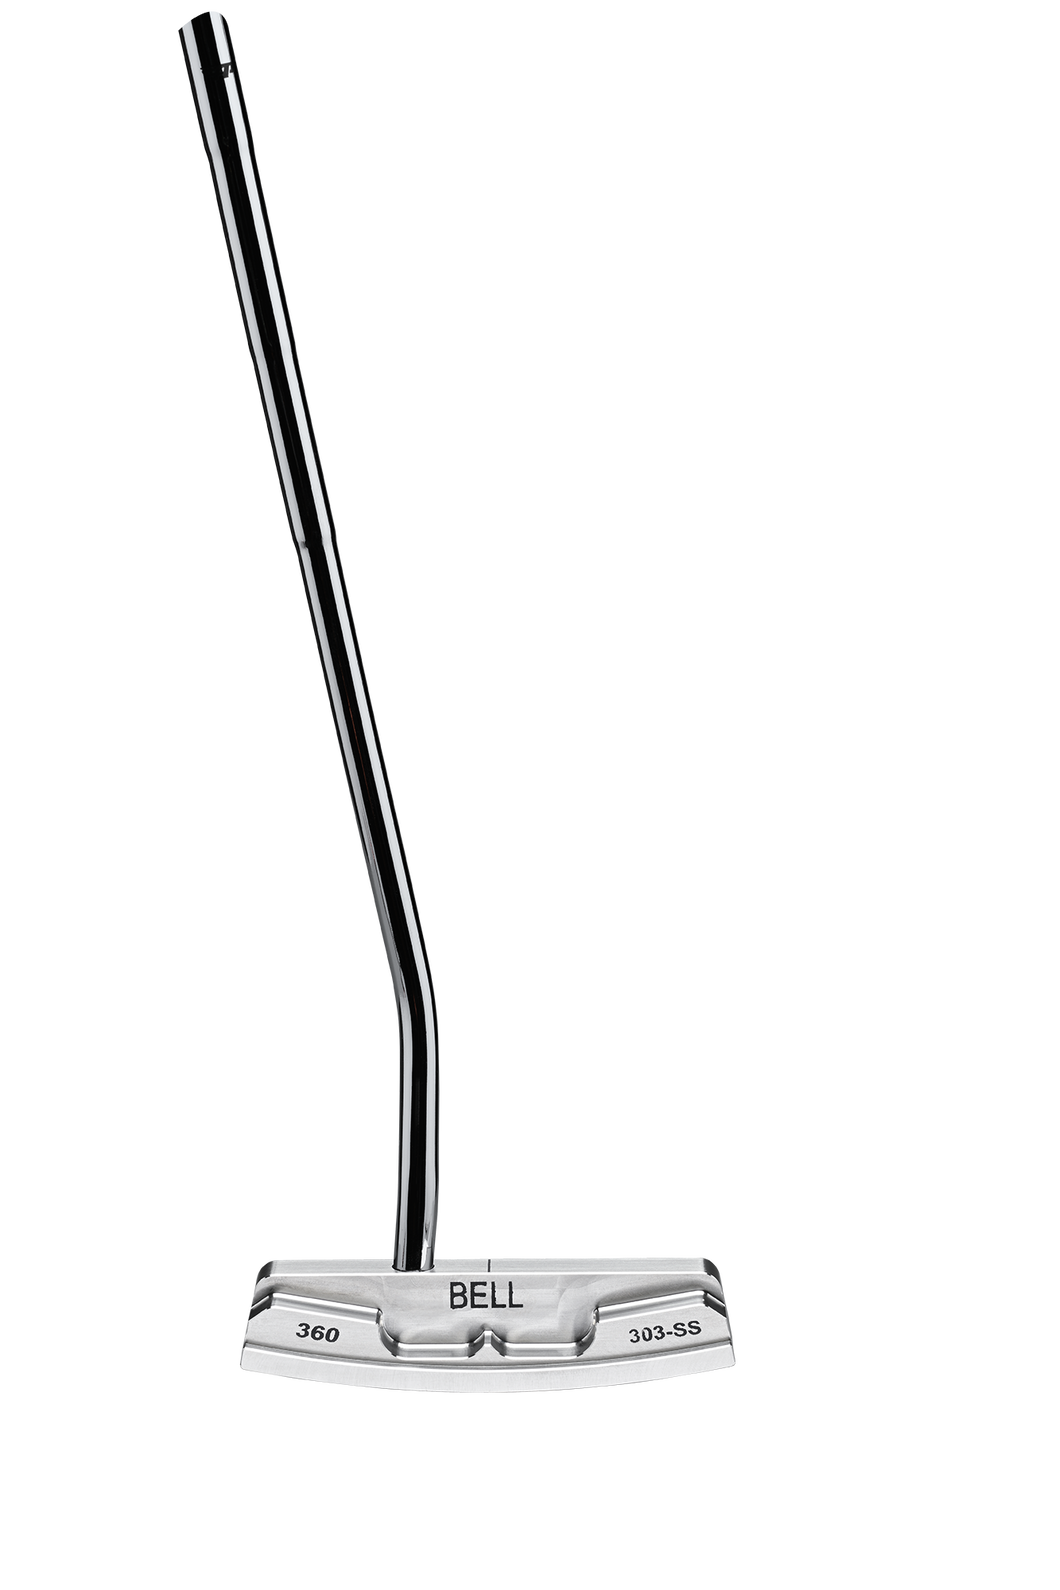 Bell H-360 Right Hand Half-Offset Upright Lie 76 Degrees Face Balance Polished Putter - 